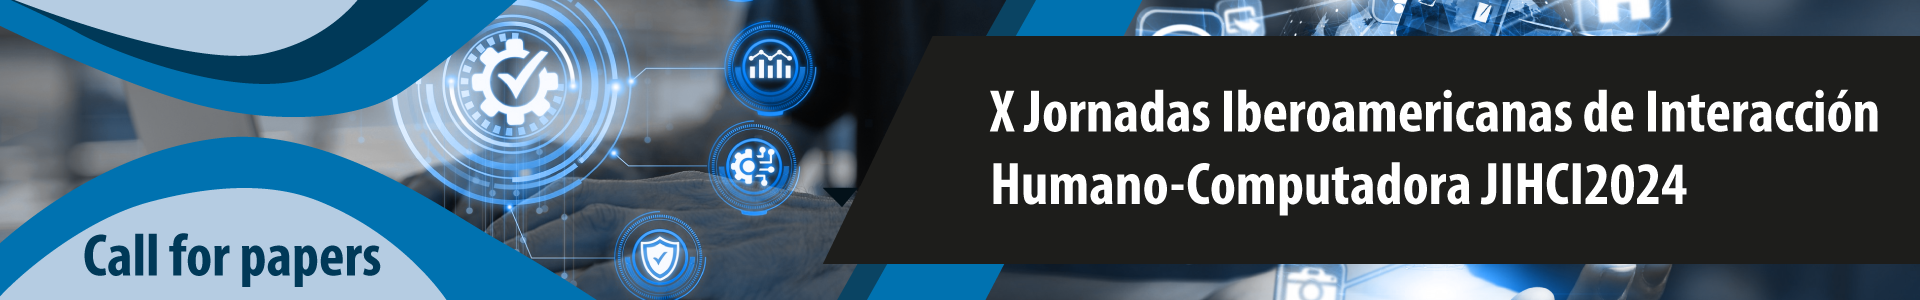 Call of Papers - X Jornadas Iberoamericanas de interacción humano-computadora JIHCI2024